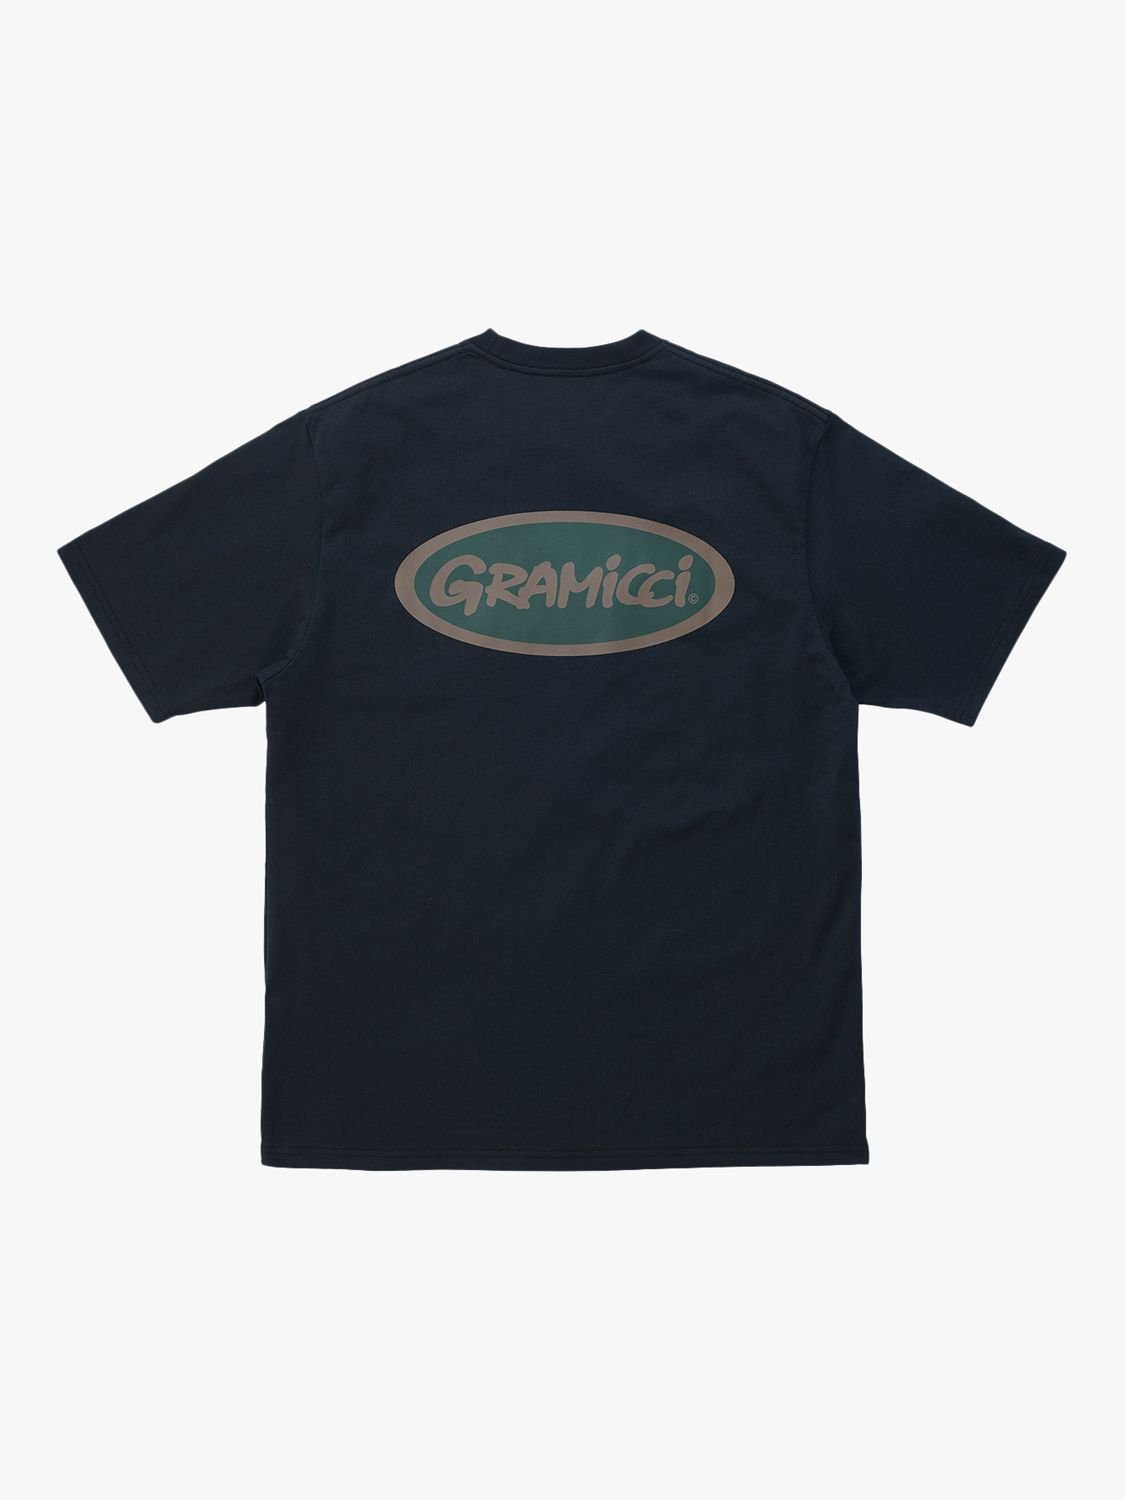 Gramicci Oval Logo Organic Cotton T-Shirt, Vintage Black, XL